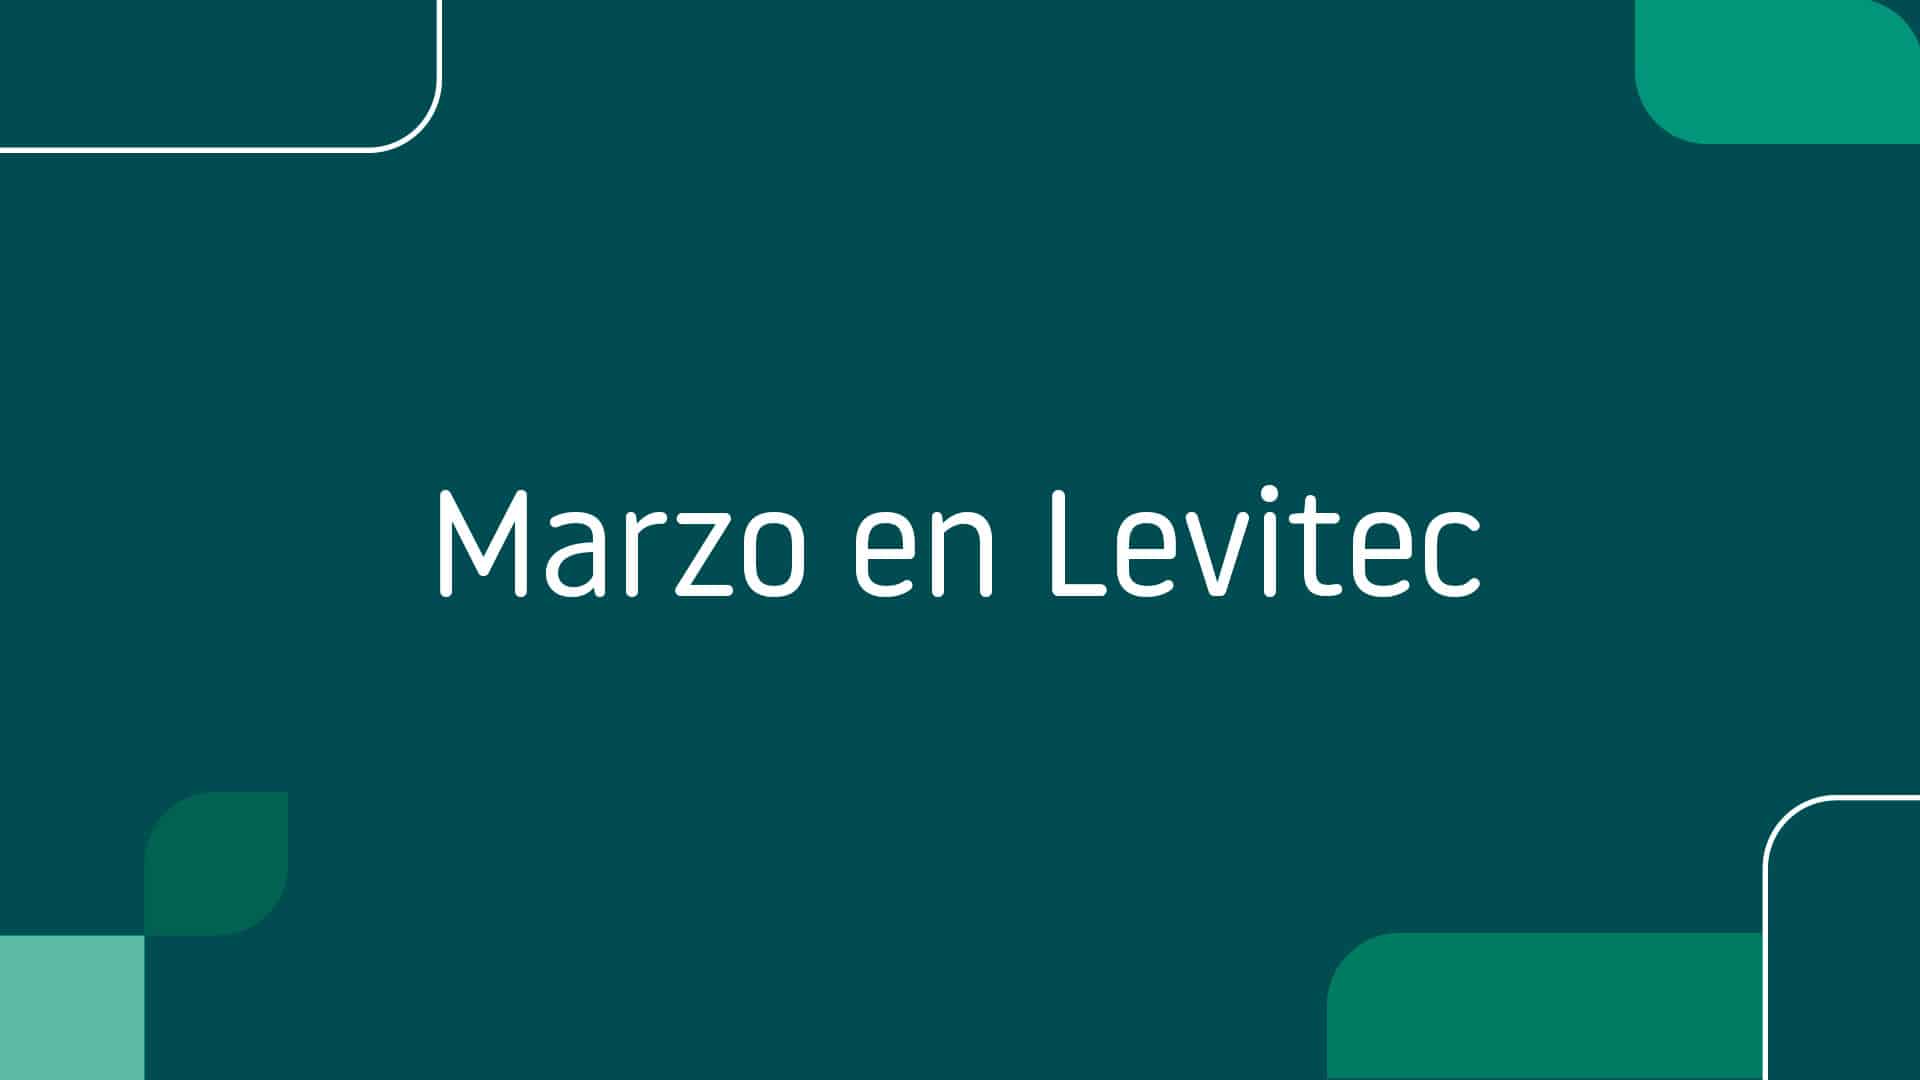 Marzo en Levitec